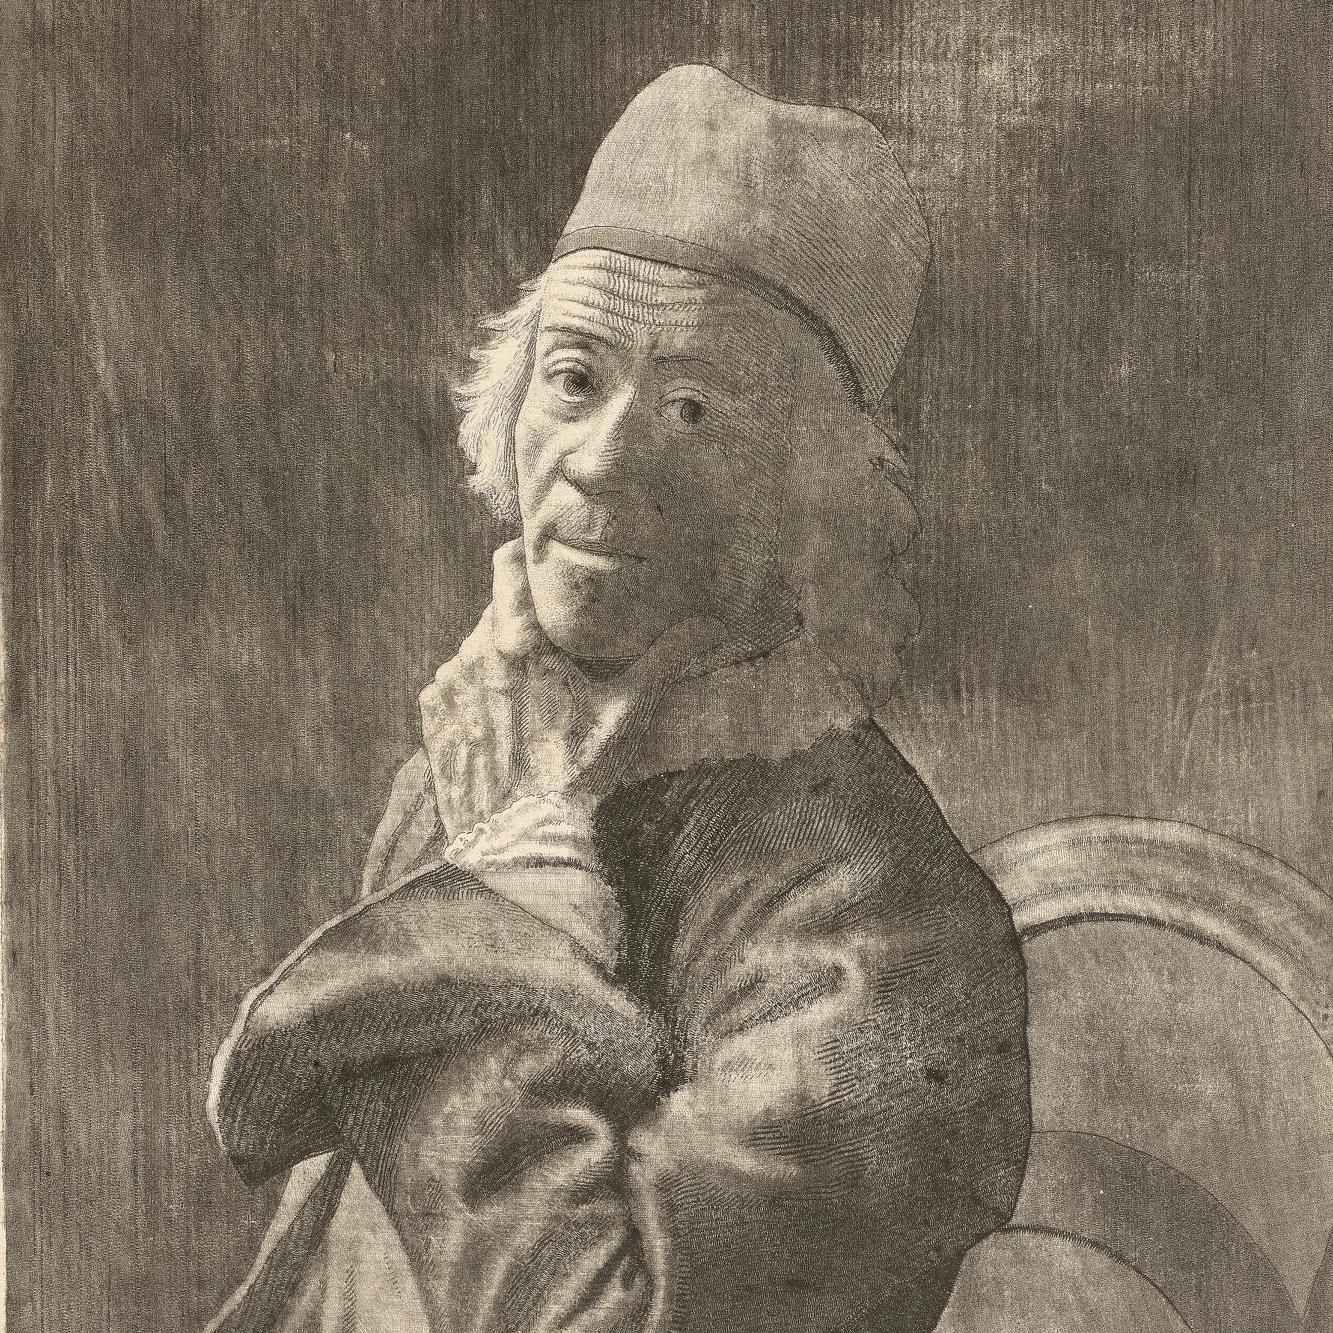 A Mezzotint Self-Portrait by Liotard - Lots sold